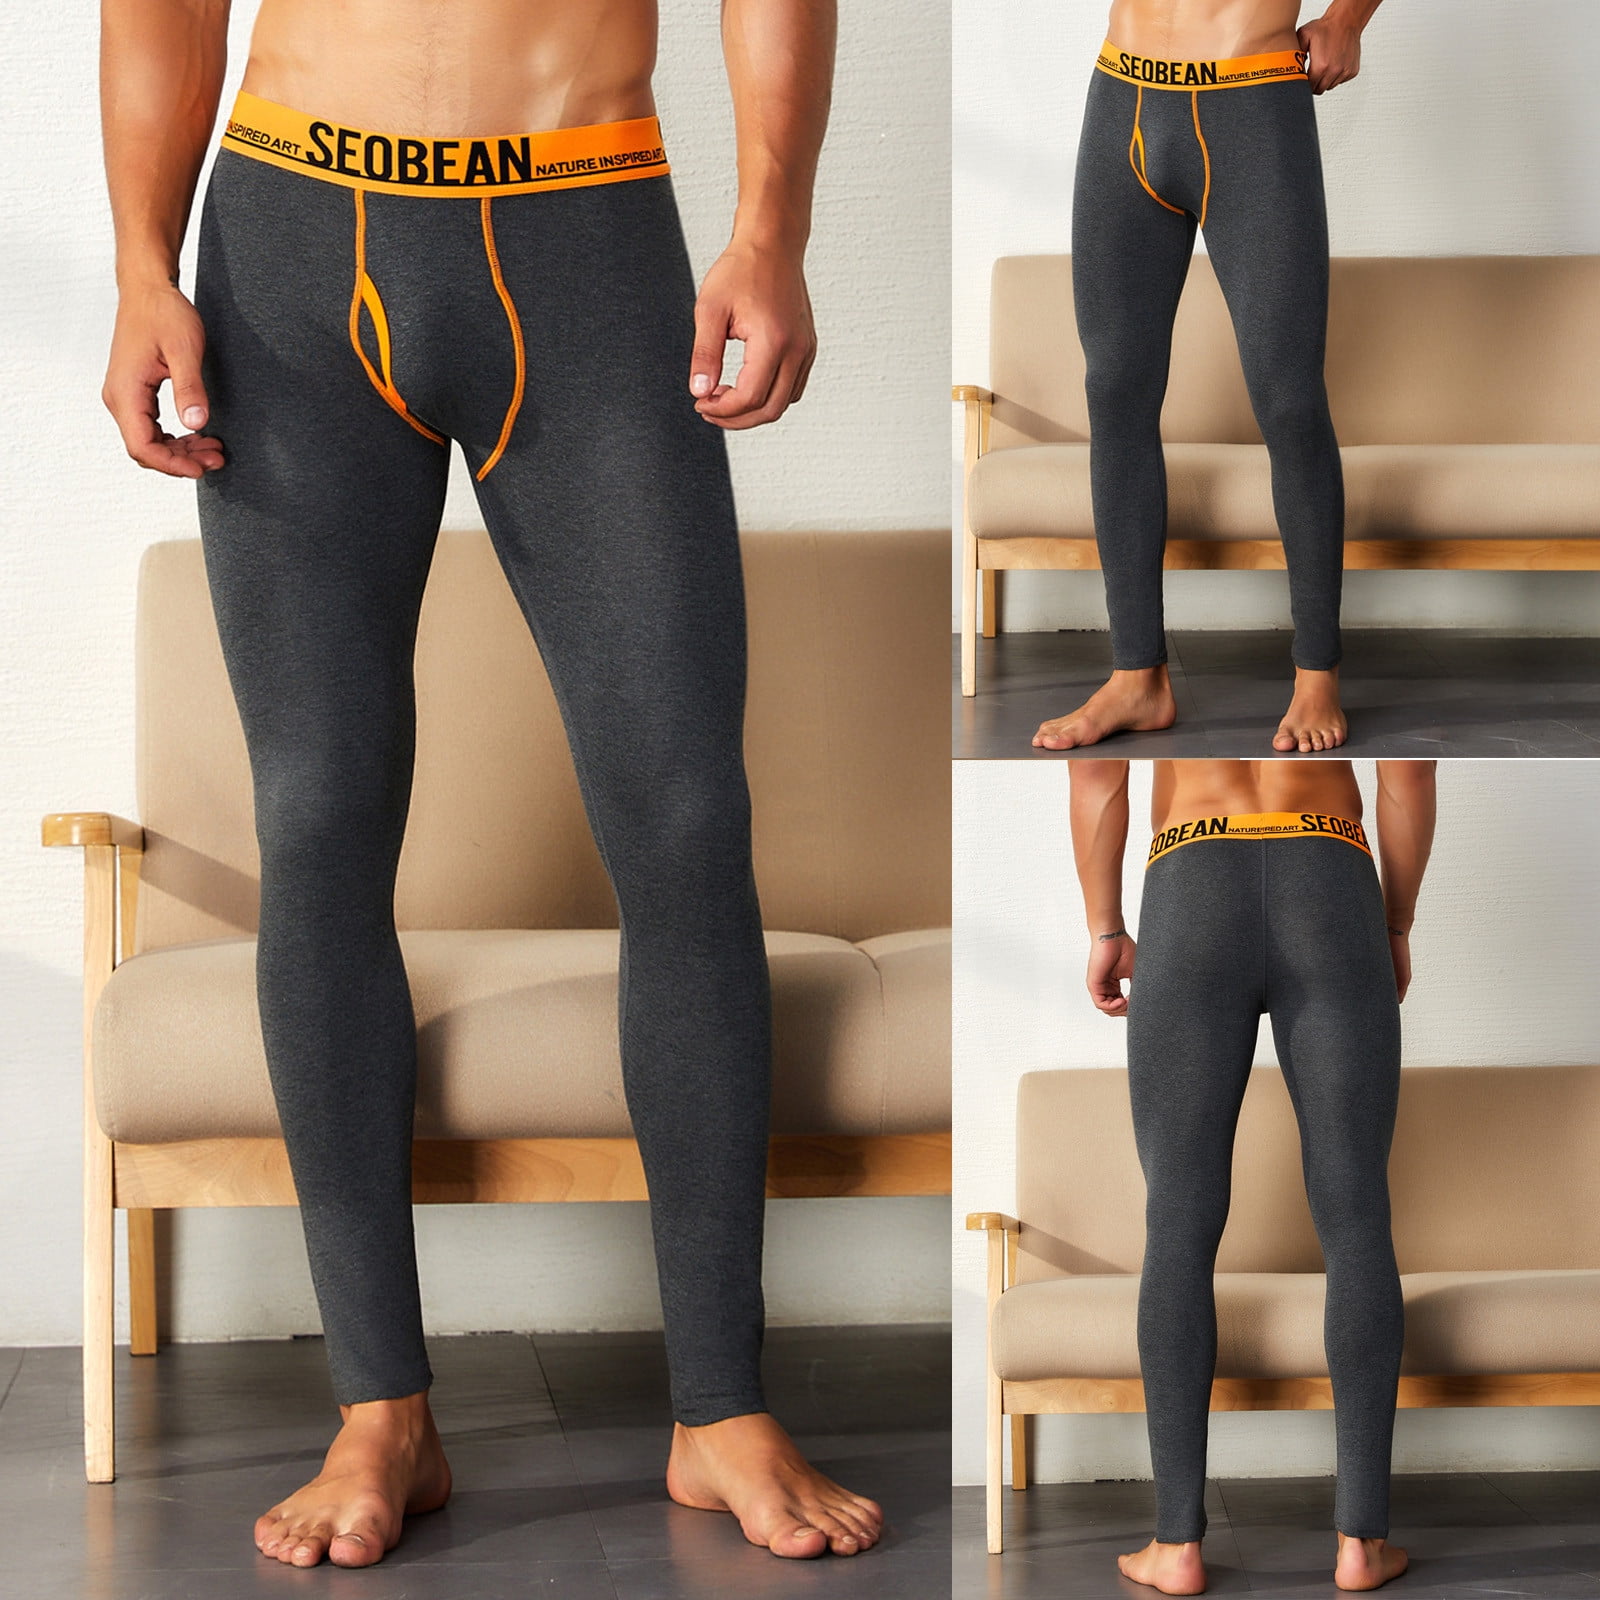 Men Running Tights Pants 2020 Men Sports Legging Sportswear Quick Dry –  thuylinh321